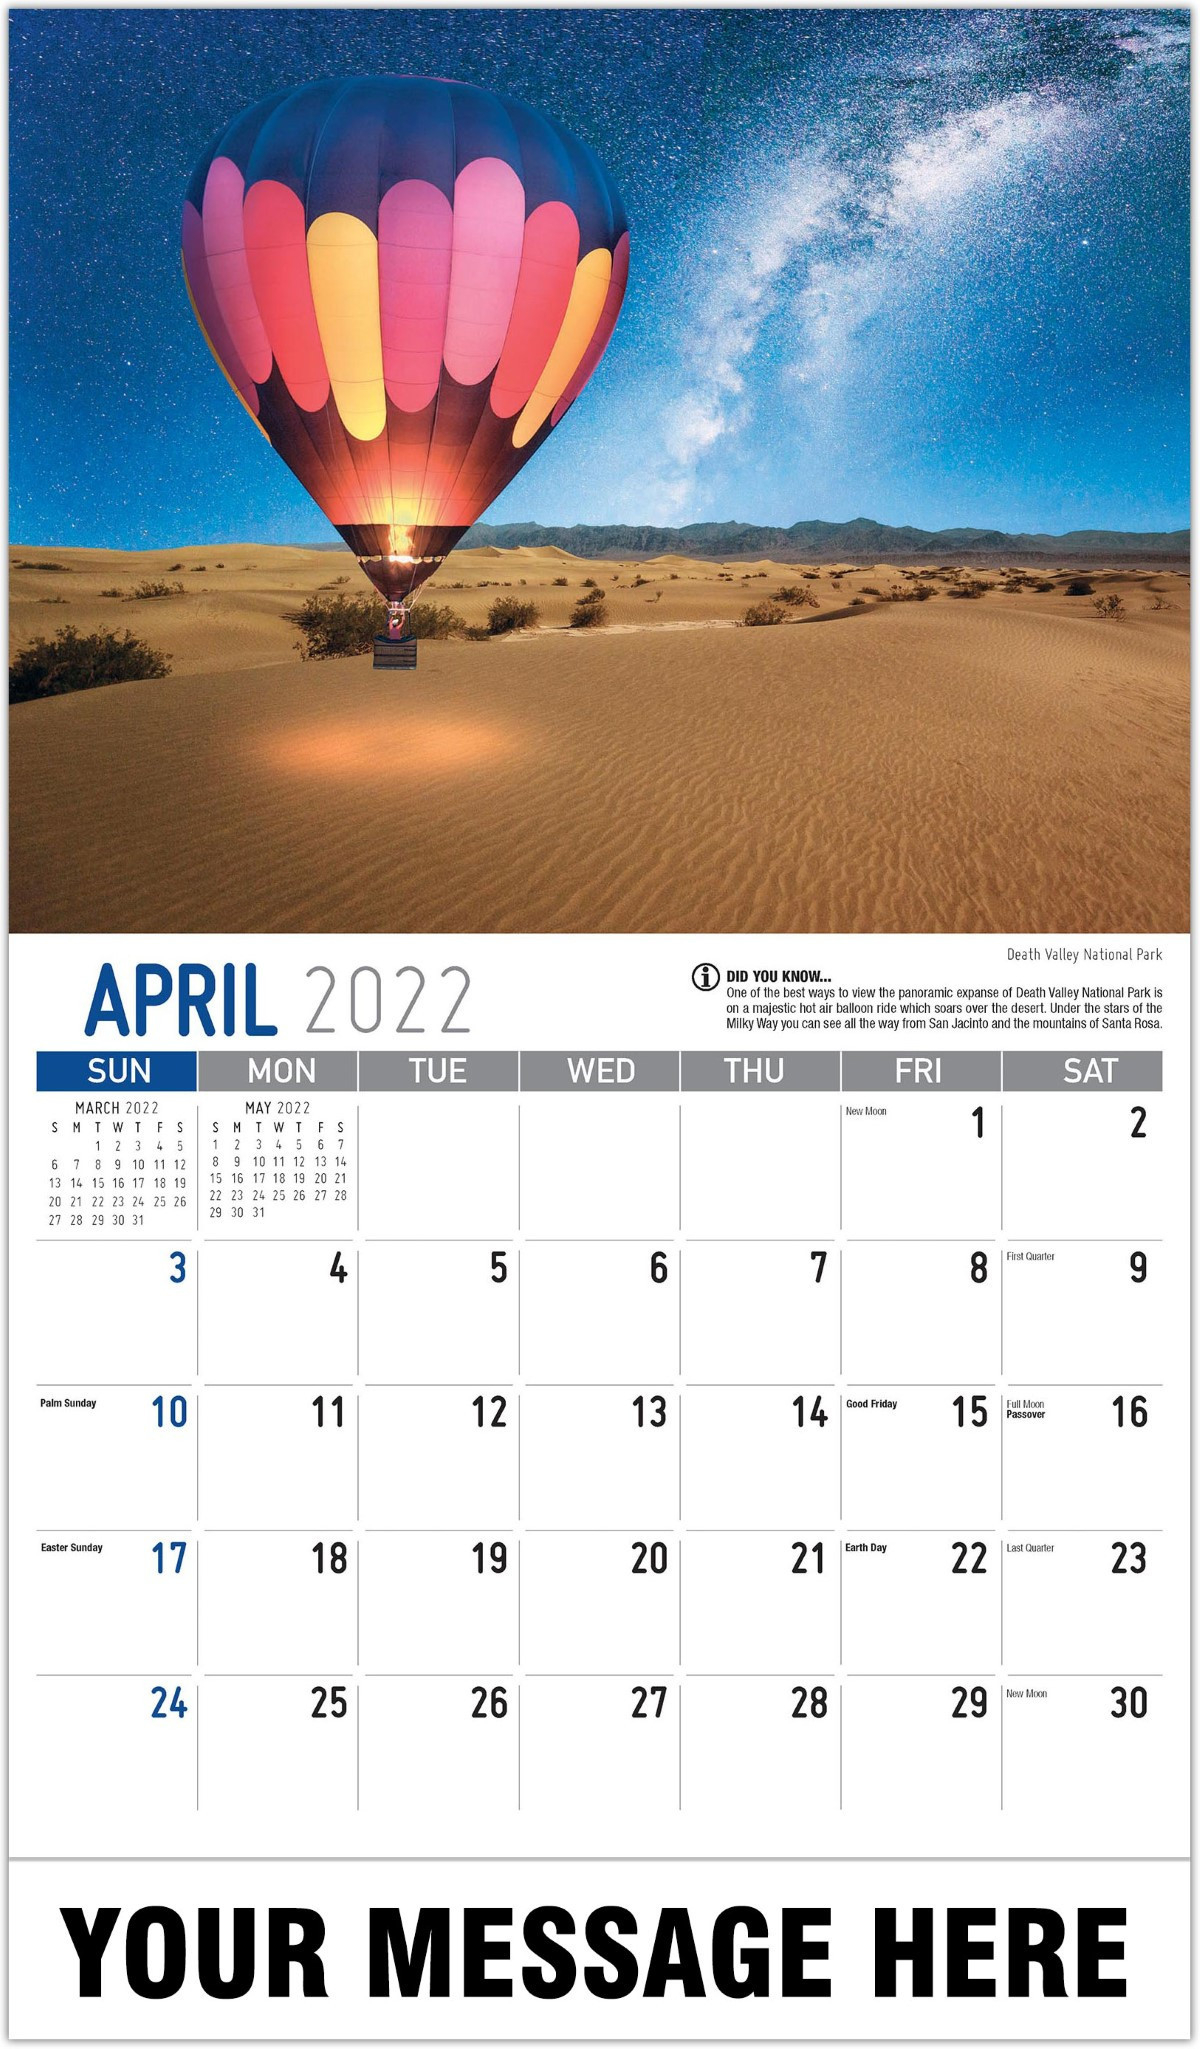 Scenes Of California - 2022 Promotional Calendar  Calendar 2022 California